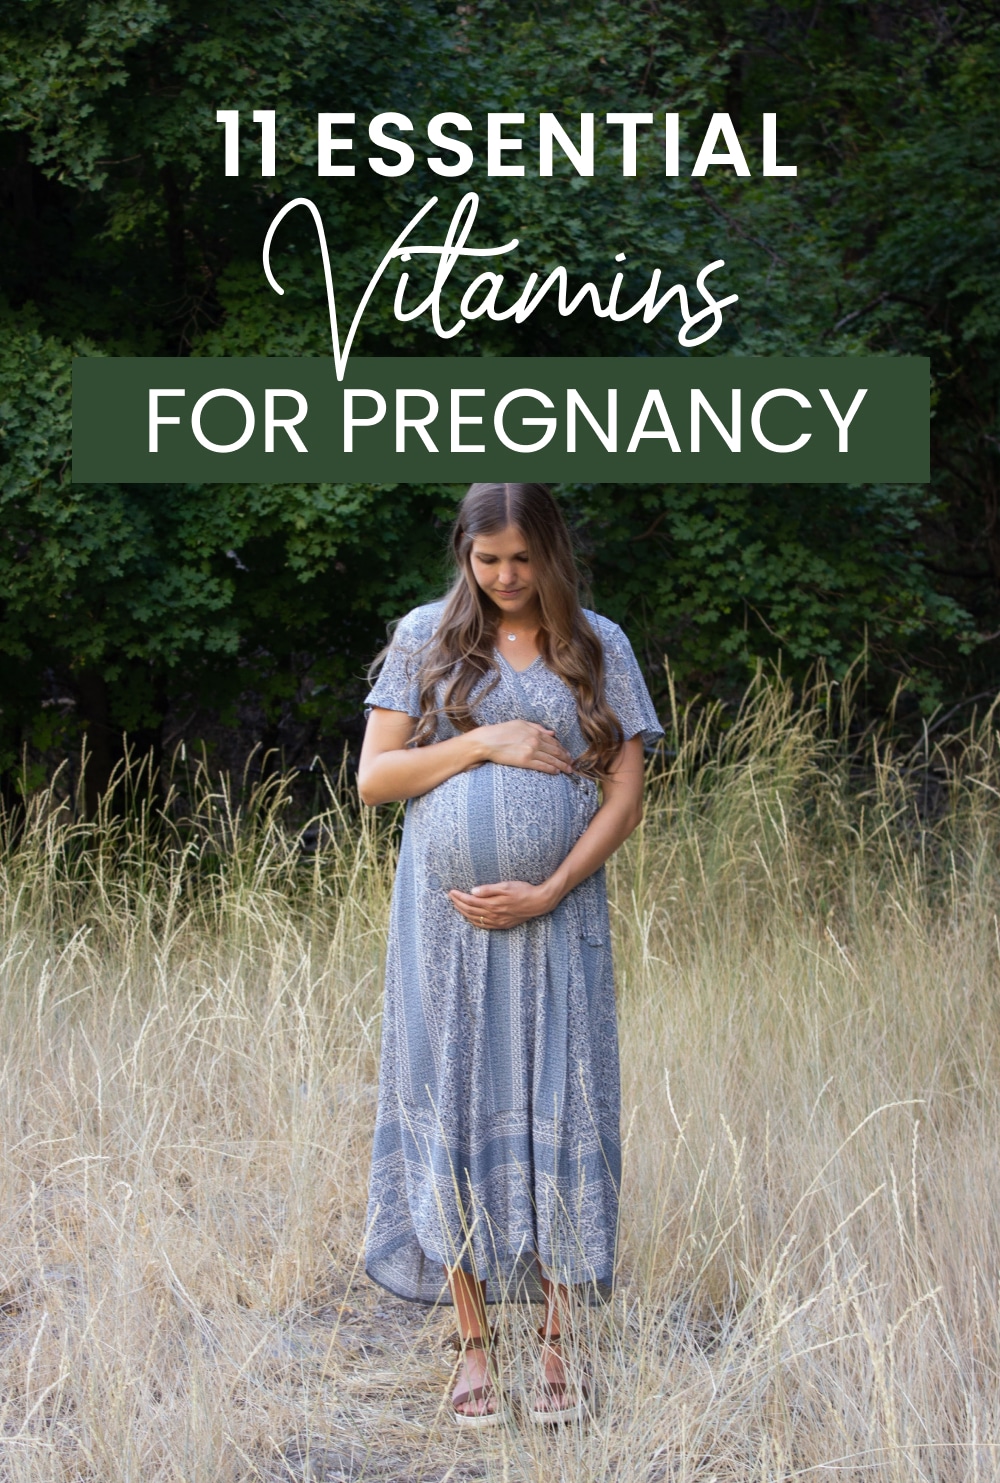 Essential vitamins for pregnancy